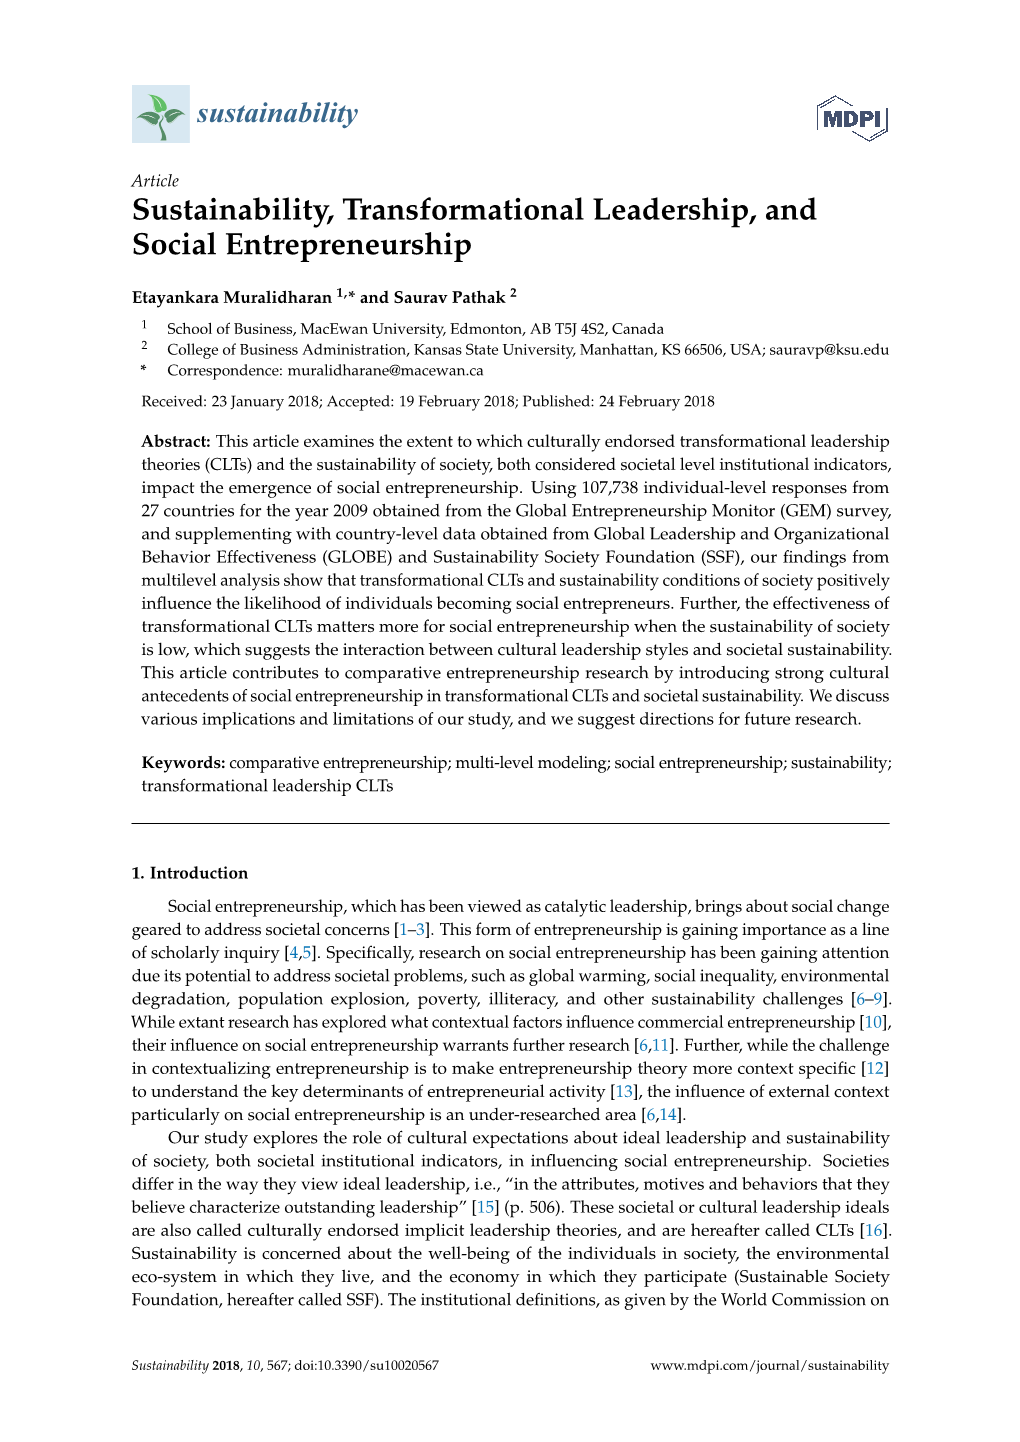 Sustainability, Transformational Leadership, and Social Entrepreneurship